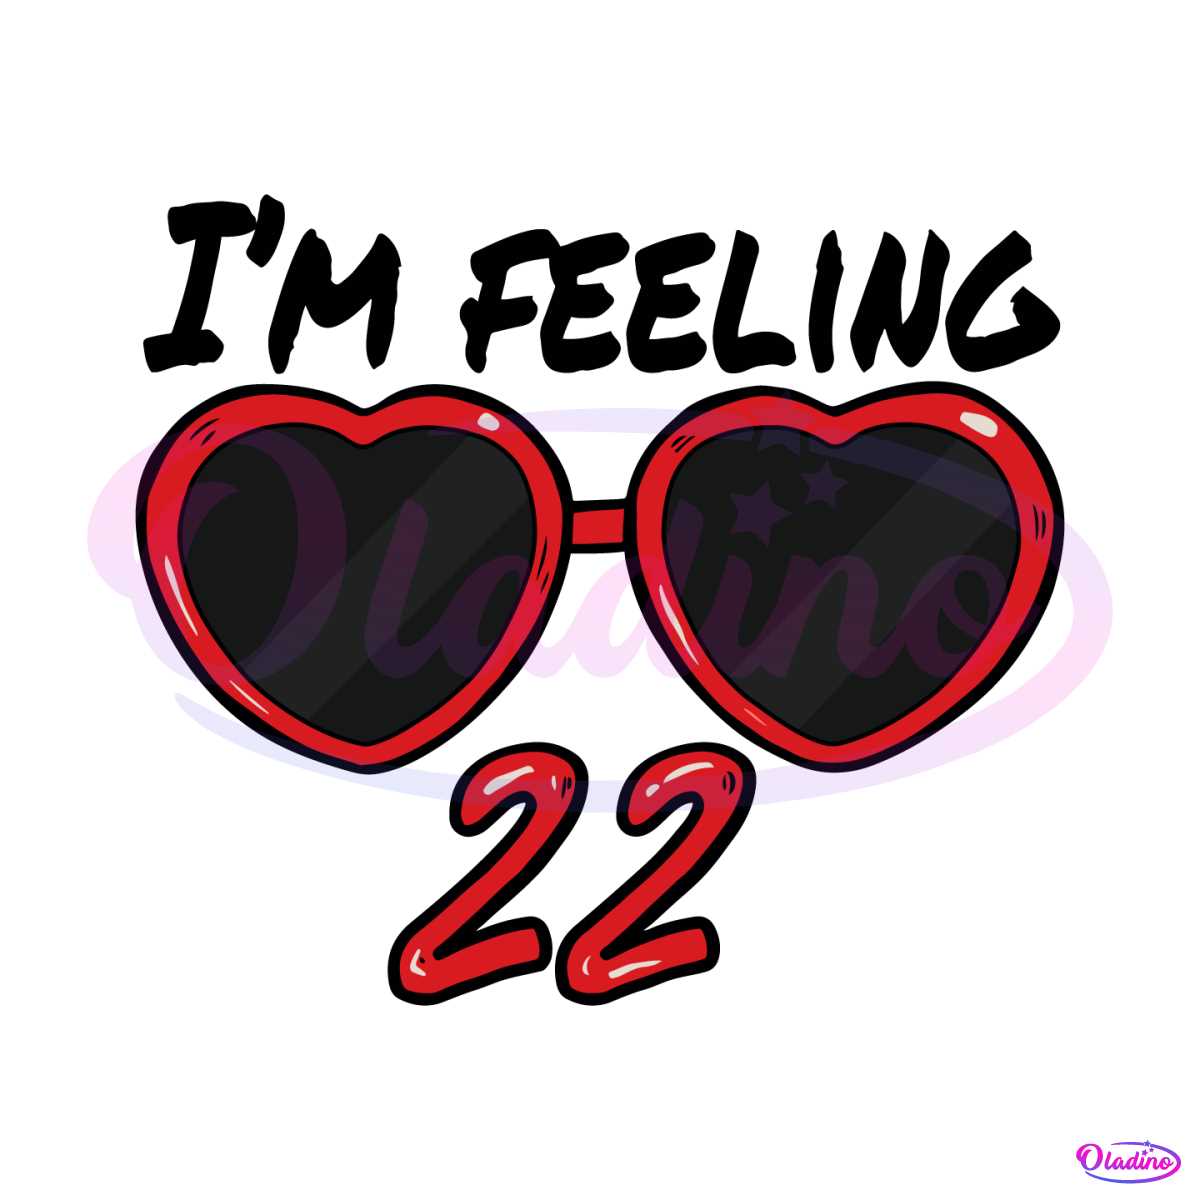 im-feeling-22-glasses-red-album-eras-tour-svg-cricut-files